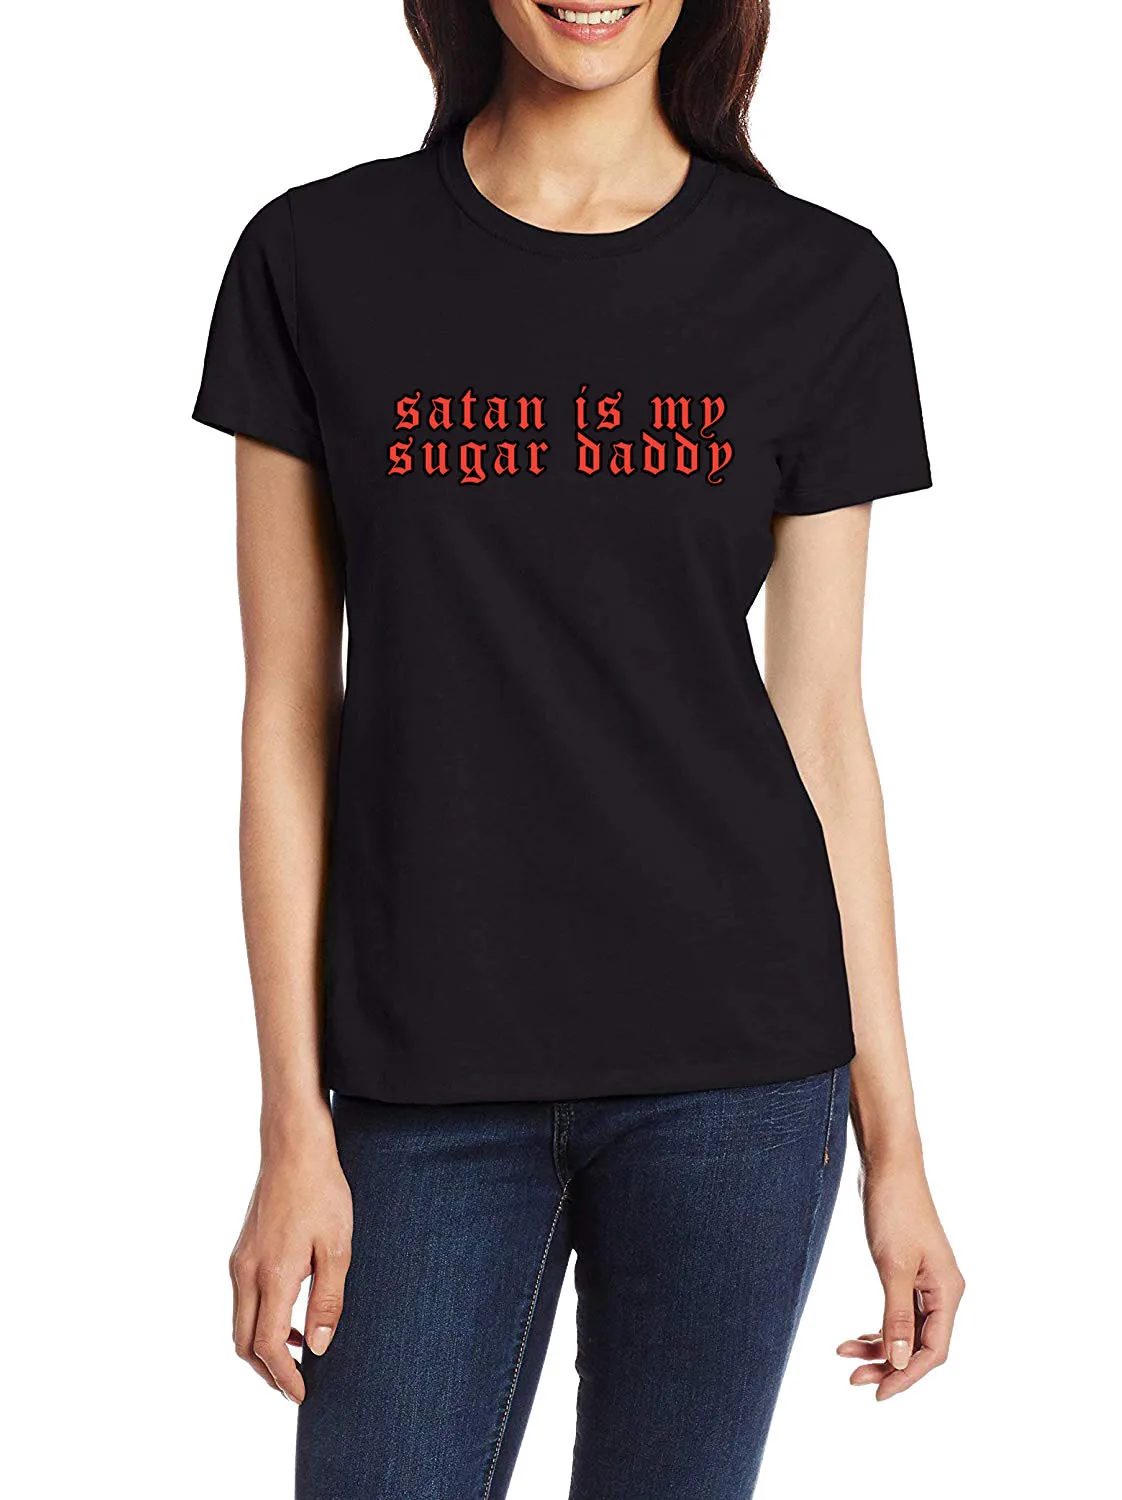 

Satan Is My Sugar Daddy Design Humor Fun Flirty T-shirt Women's Yoga Sports Workout Tee Shirts Customizable High-Quality Tops